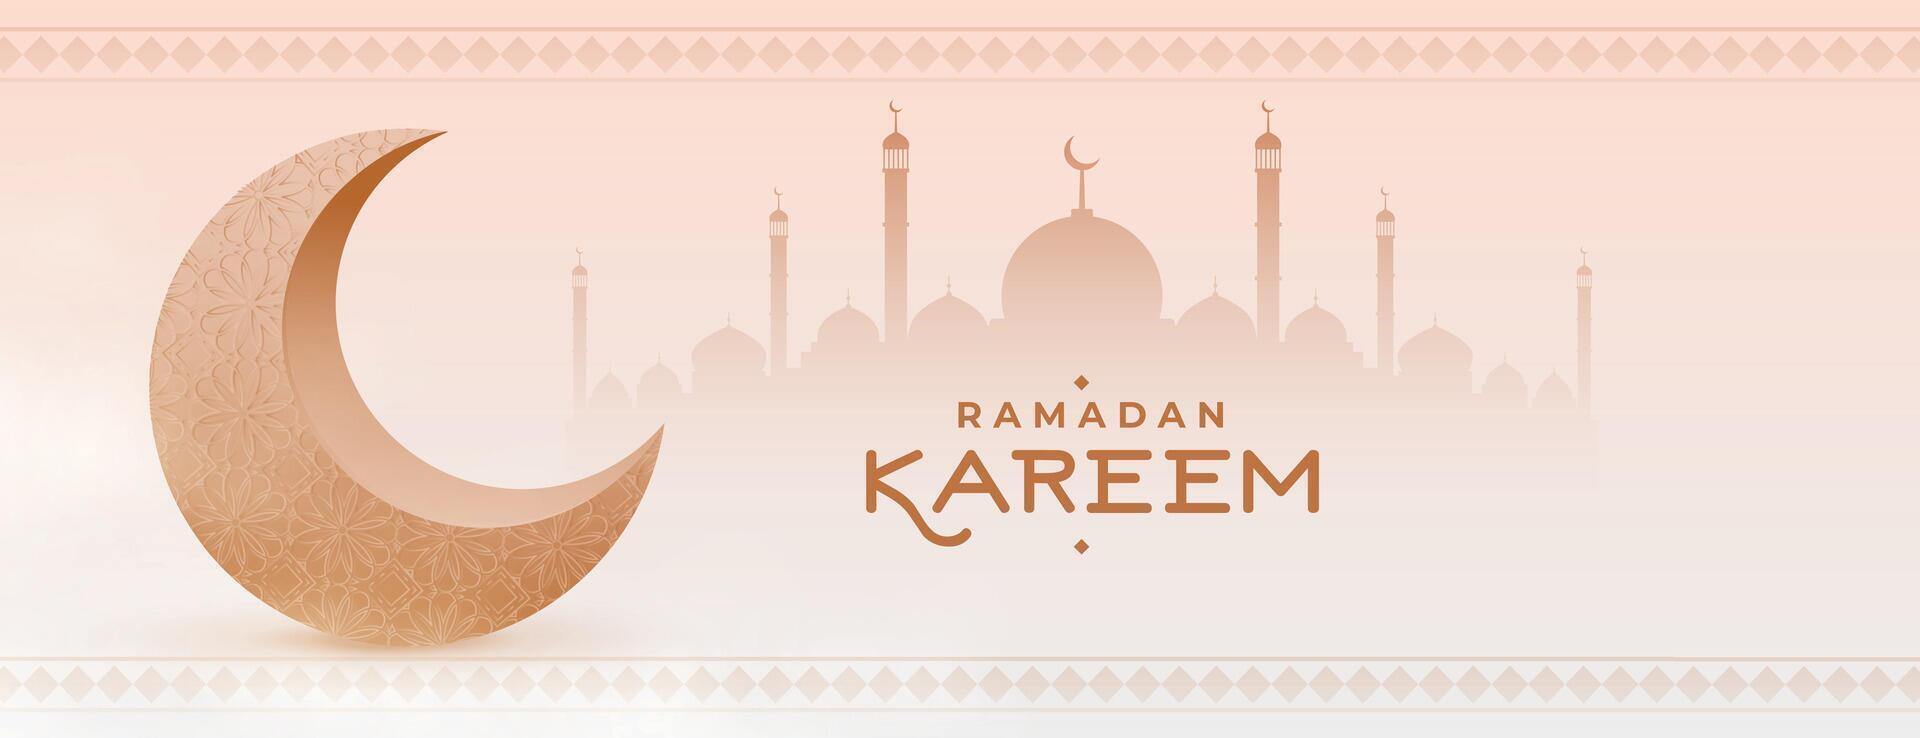 ramadan kareem and eid mubarak festival banner design vector